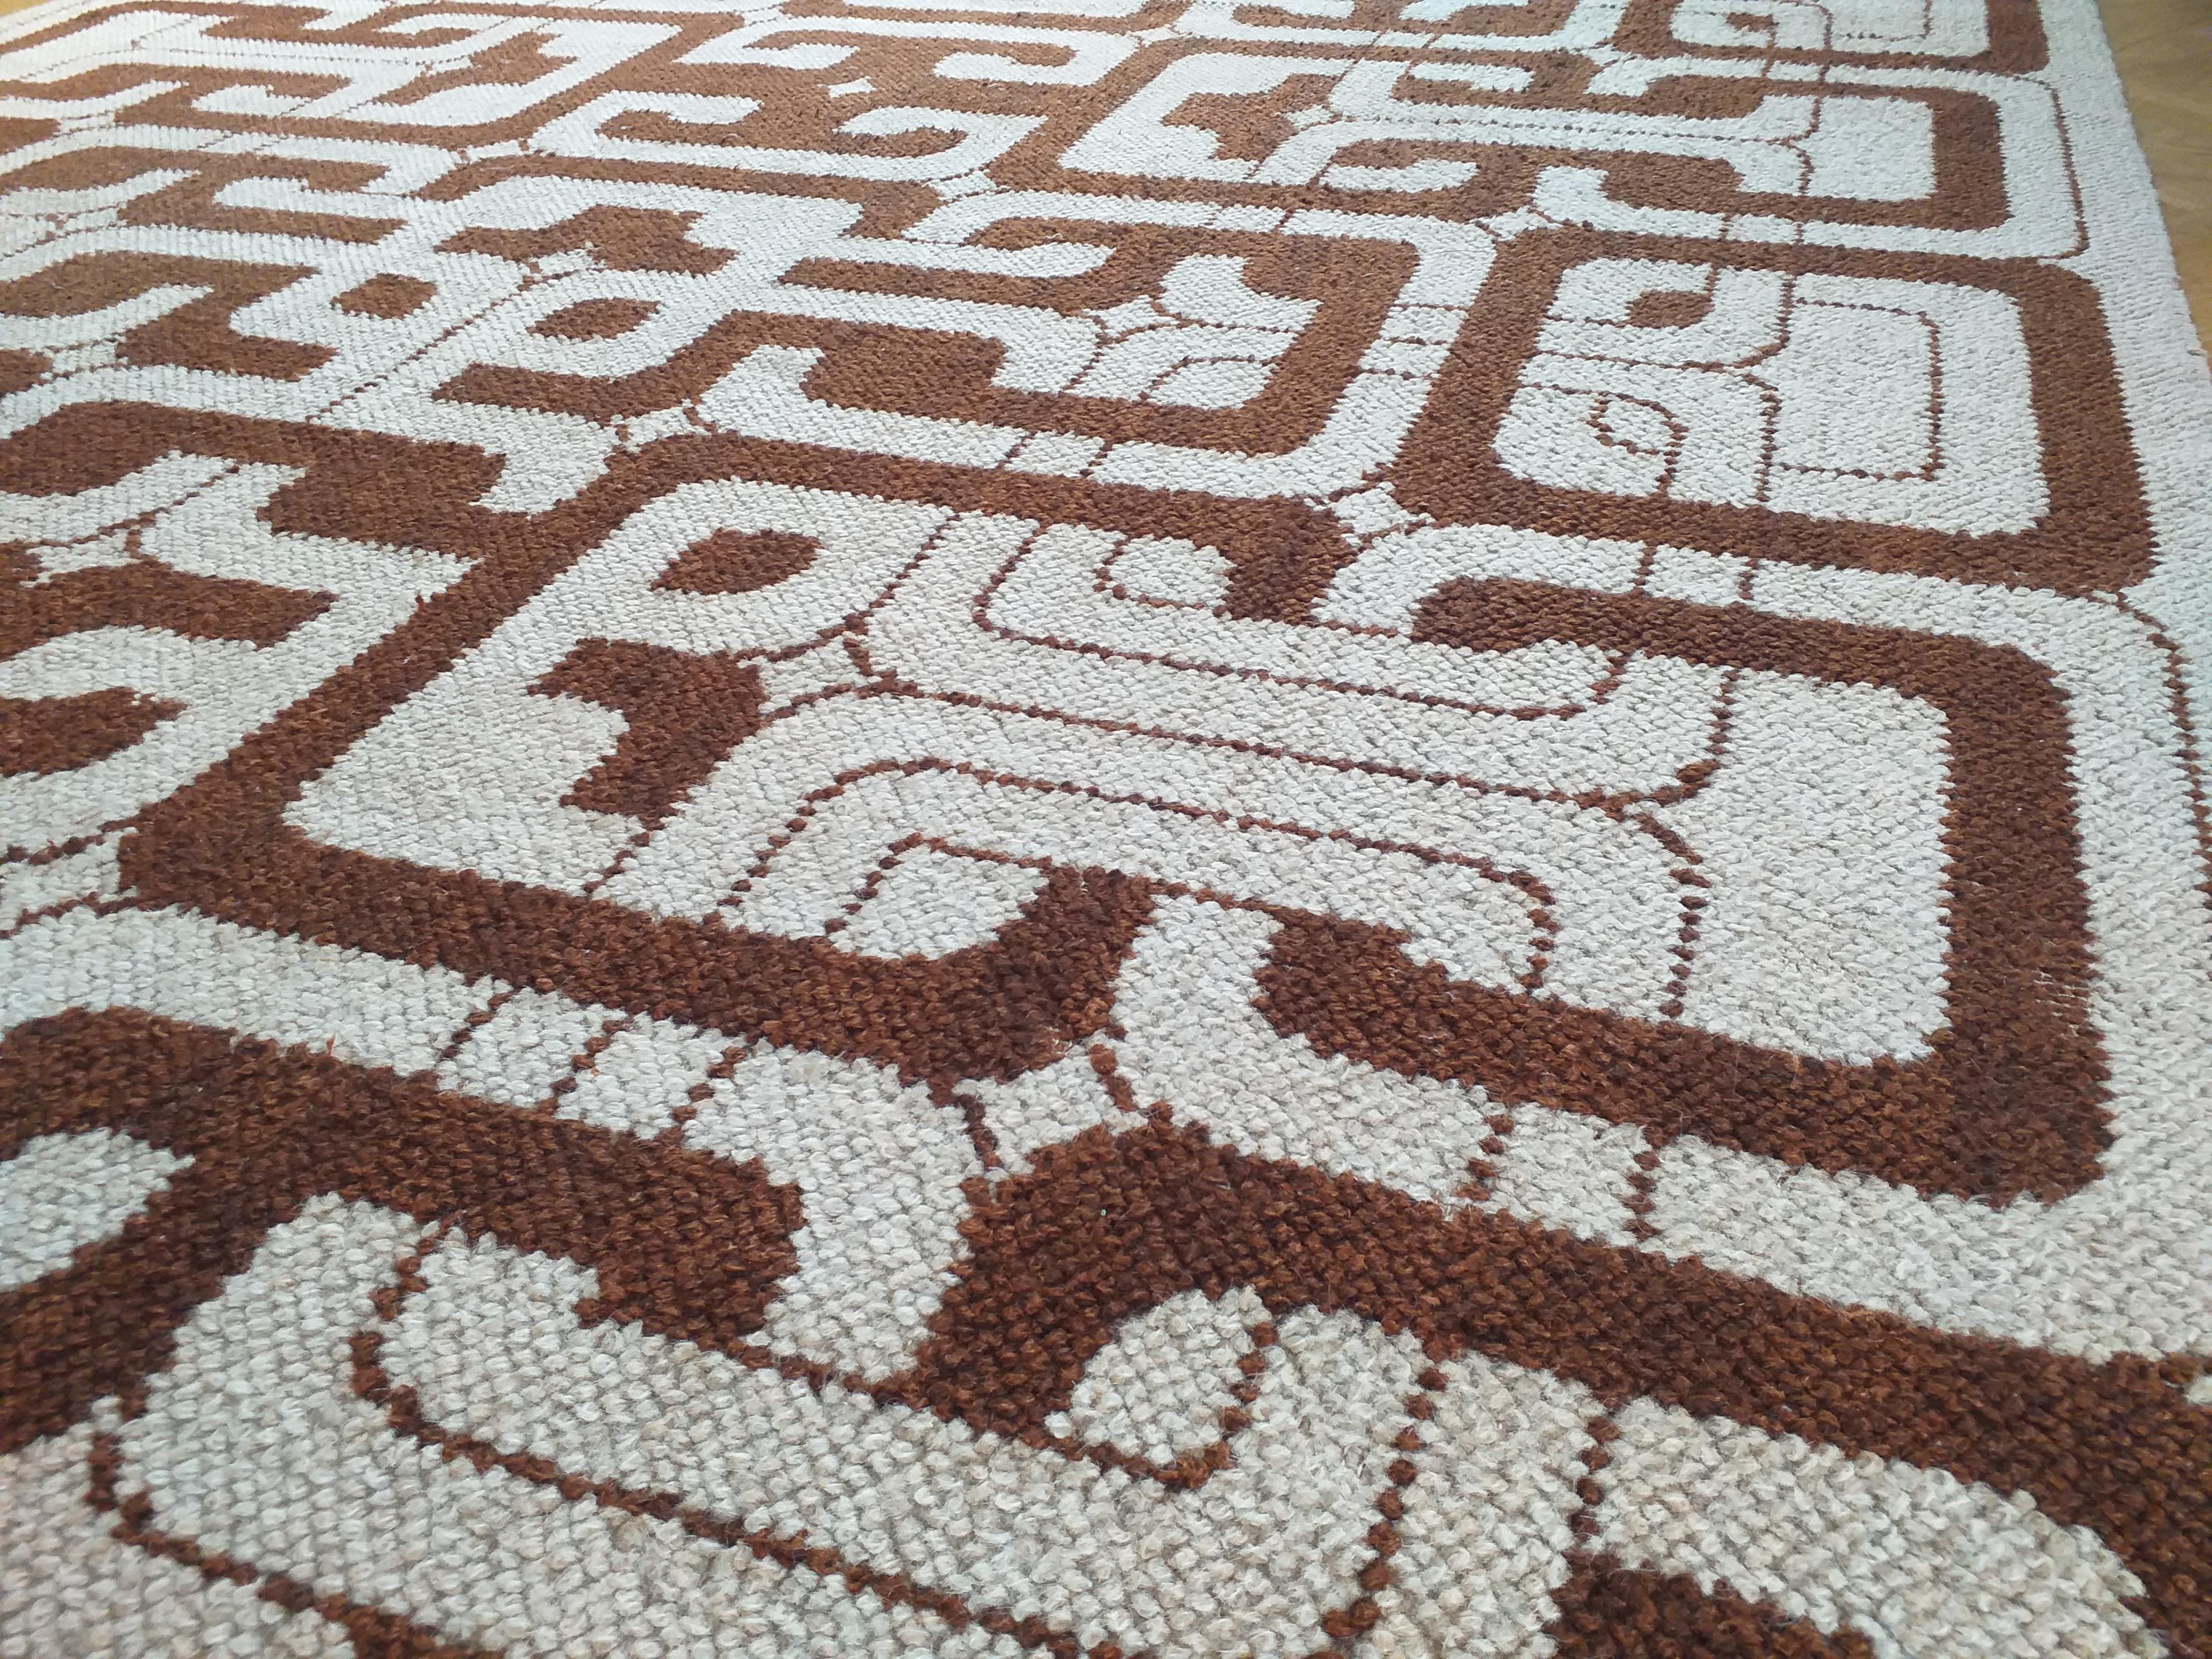 Midcentury geometric rug / carpet in Ege Rya style, Denmark, 1960s
- Handwoven / knotted
- Scandinavian design.